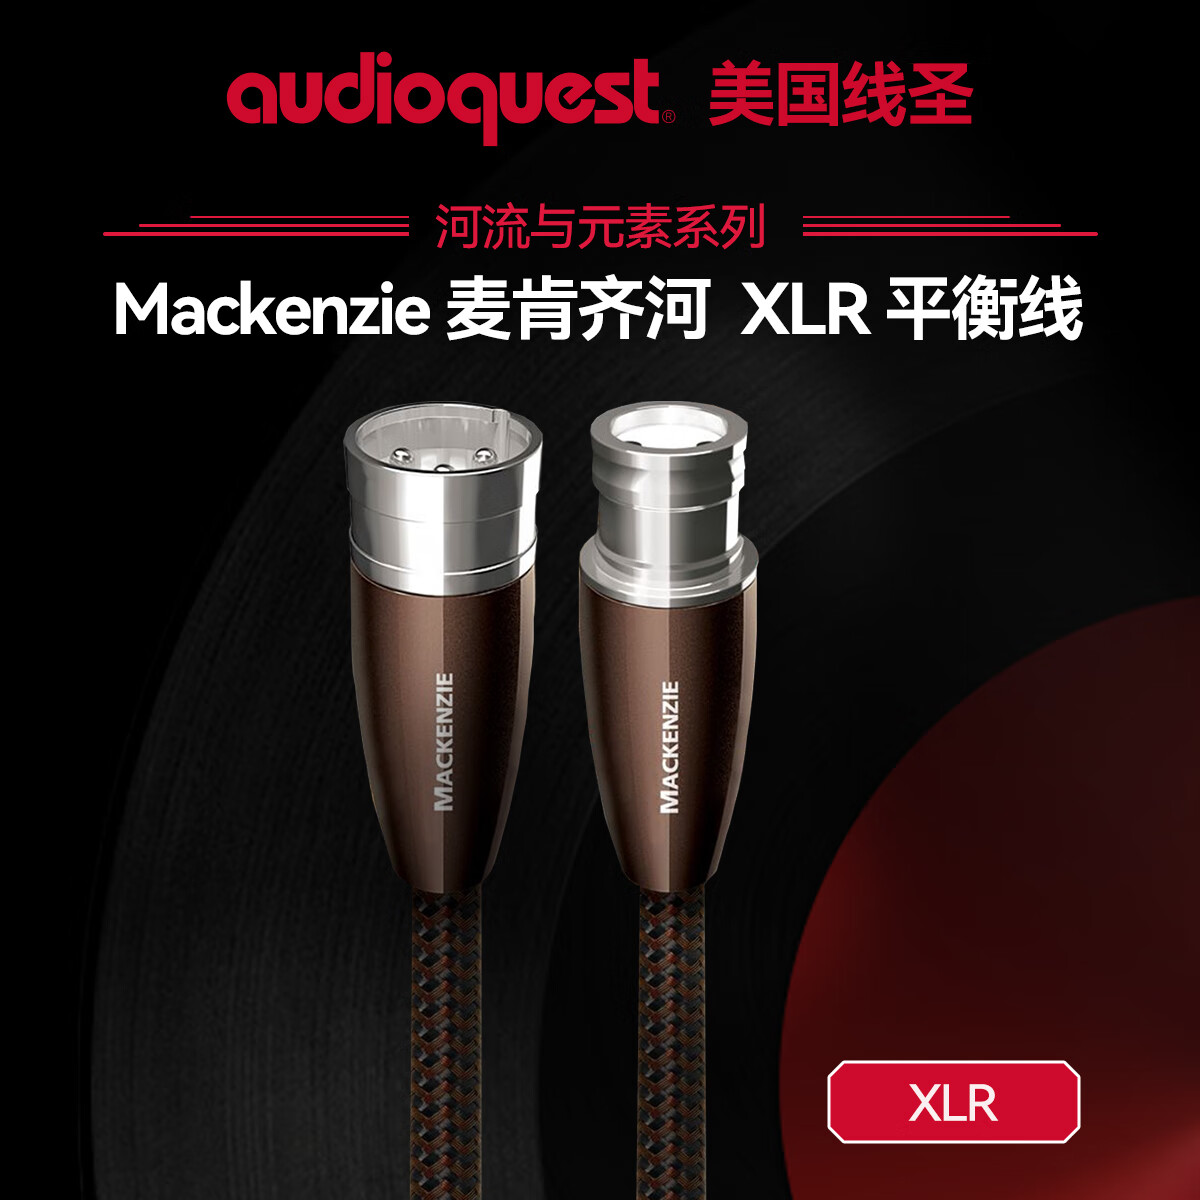 AudioQuest美国线圣Mackenzie麦肯齐河专业发烧XLR平衡线音频线发烧功放音箱音响平衡模拟信号线2m